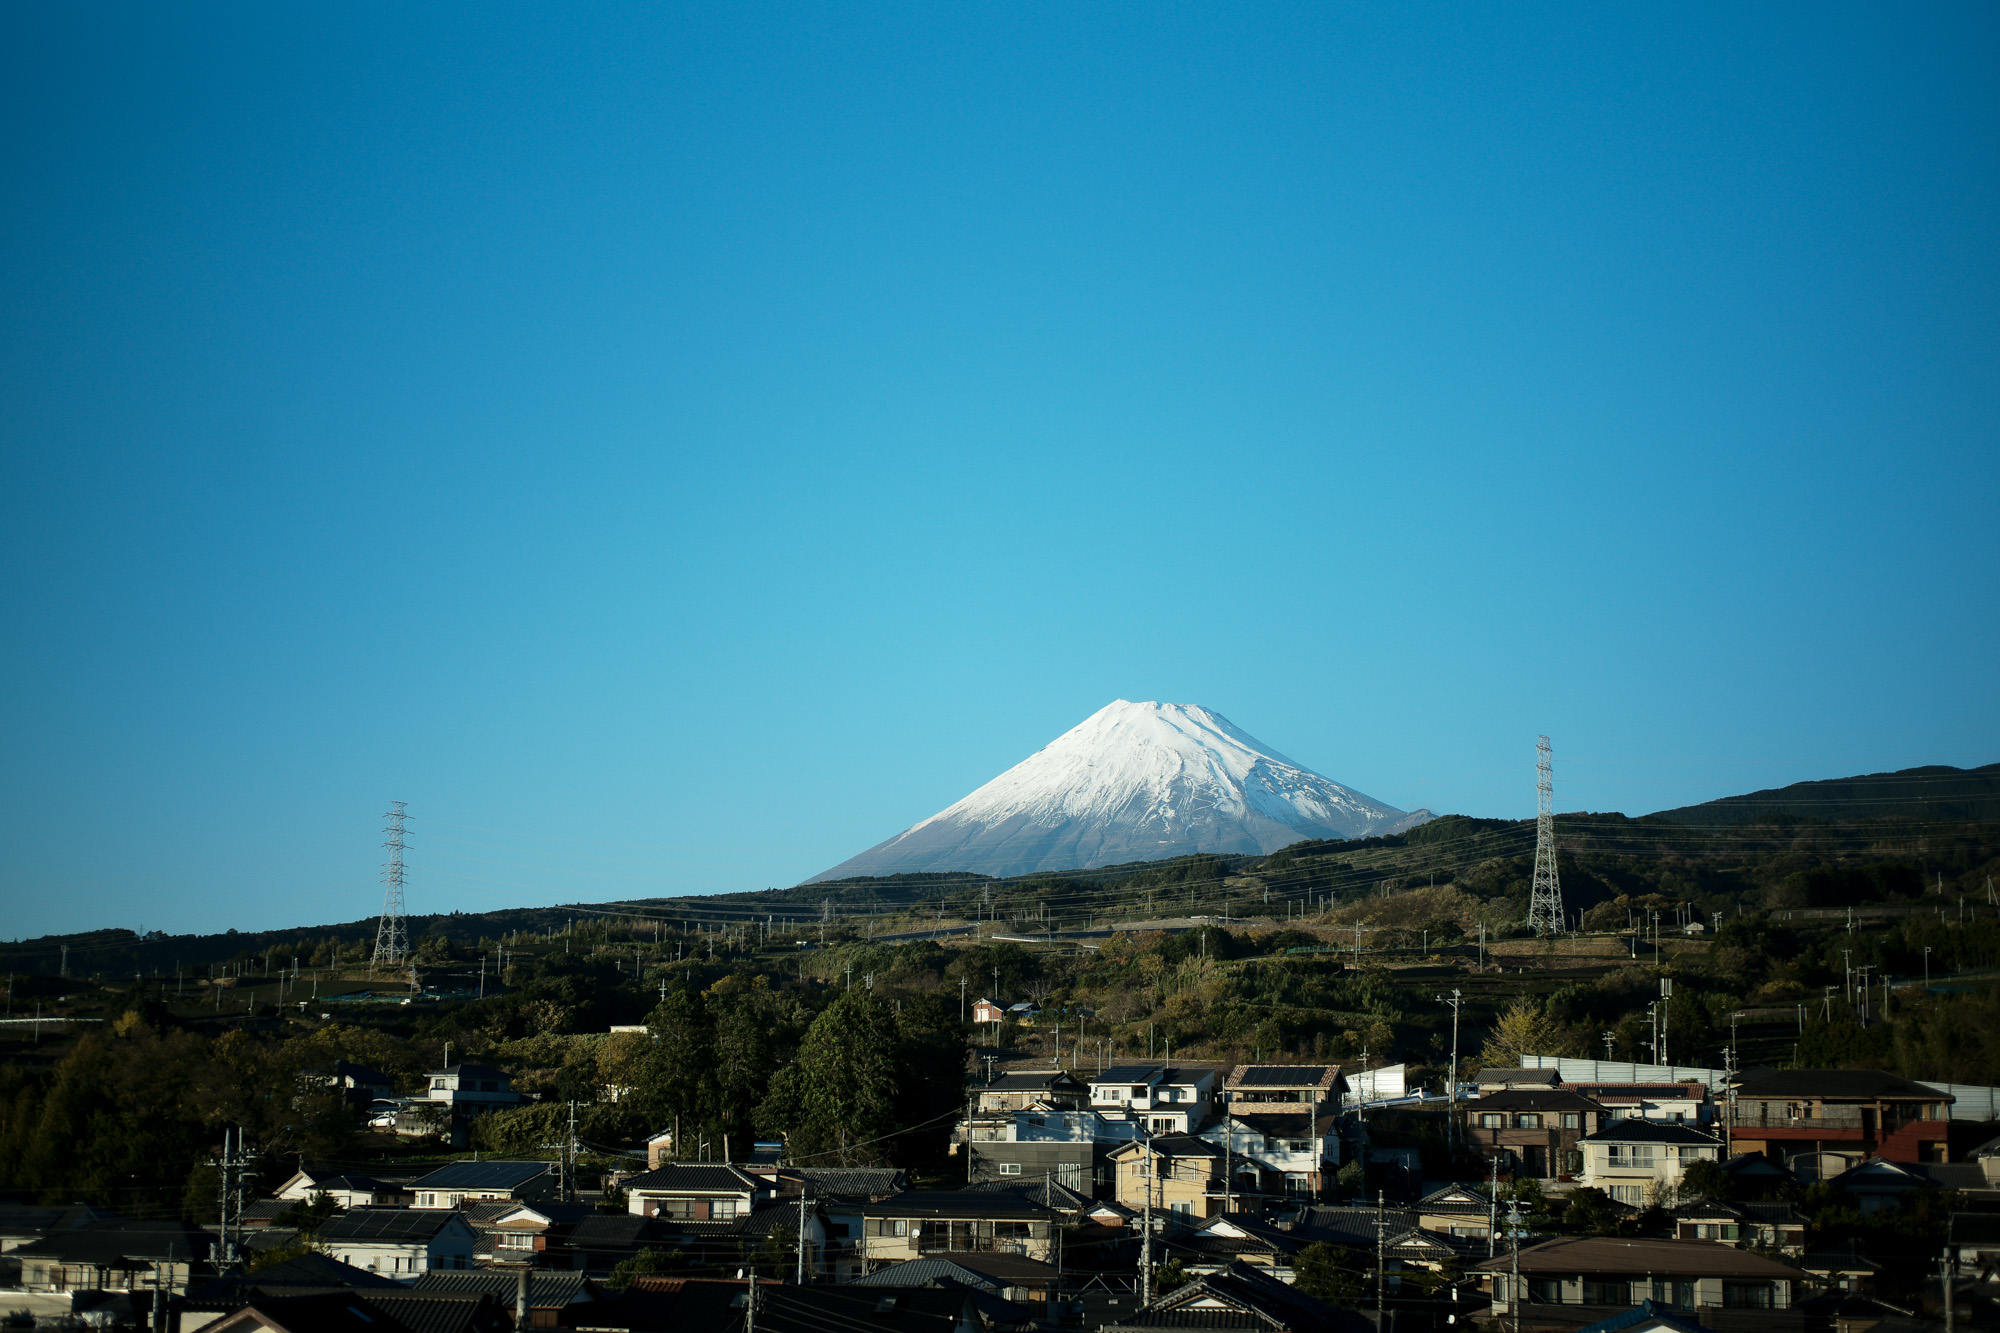 Mt. Fuji 富士山 でら富士山 愛知 名古屋 altoediritto アルトエデリット leica leicam10 ライカM10 ノクチルックス75